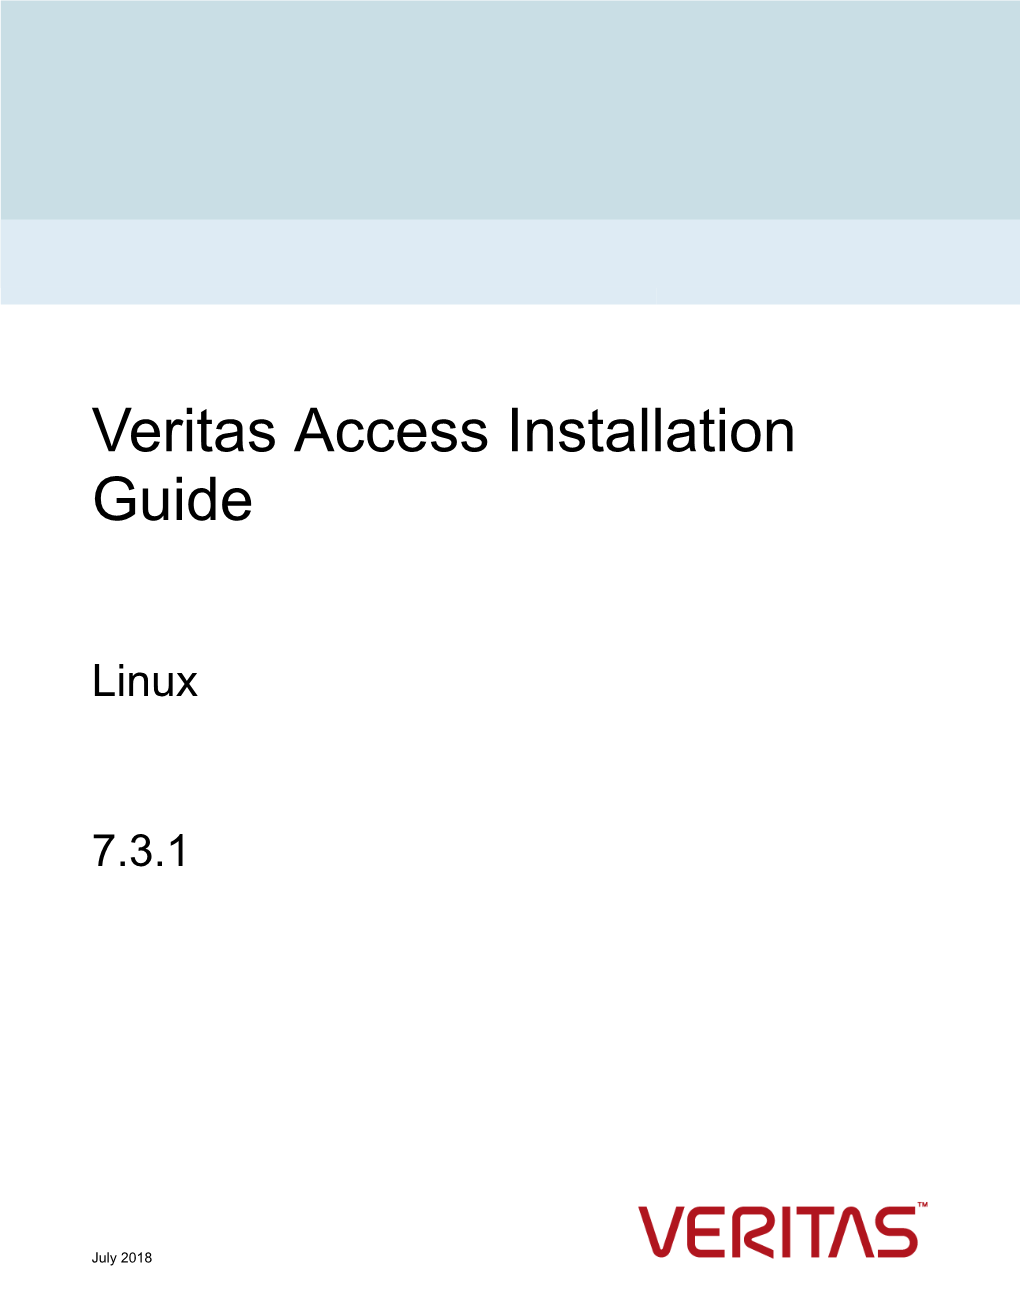 Veritas Access Installation Guide : Linux